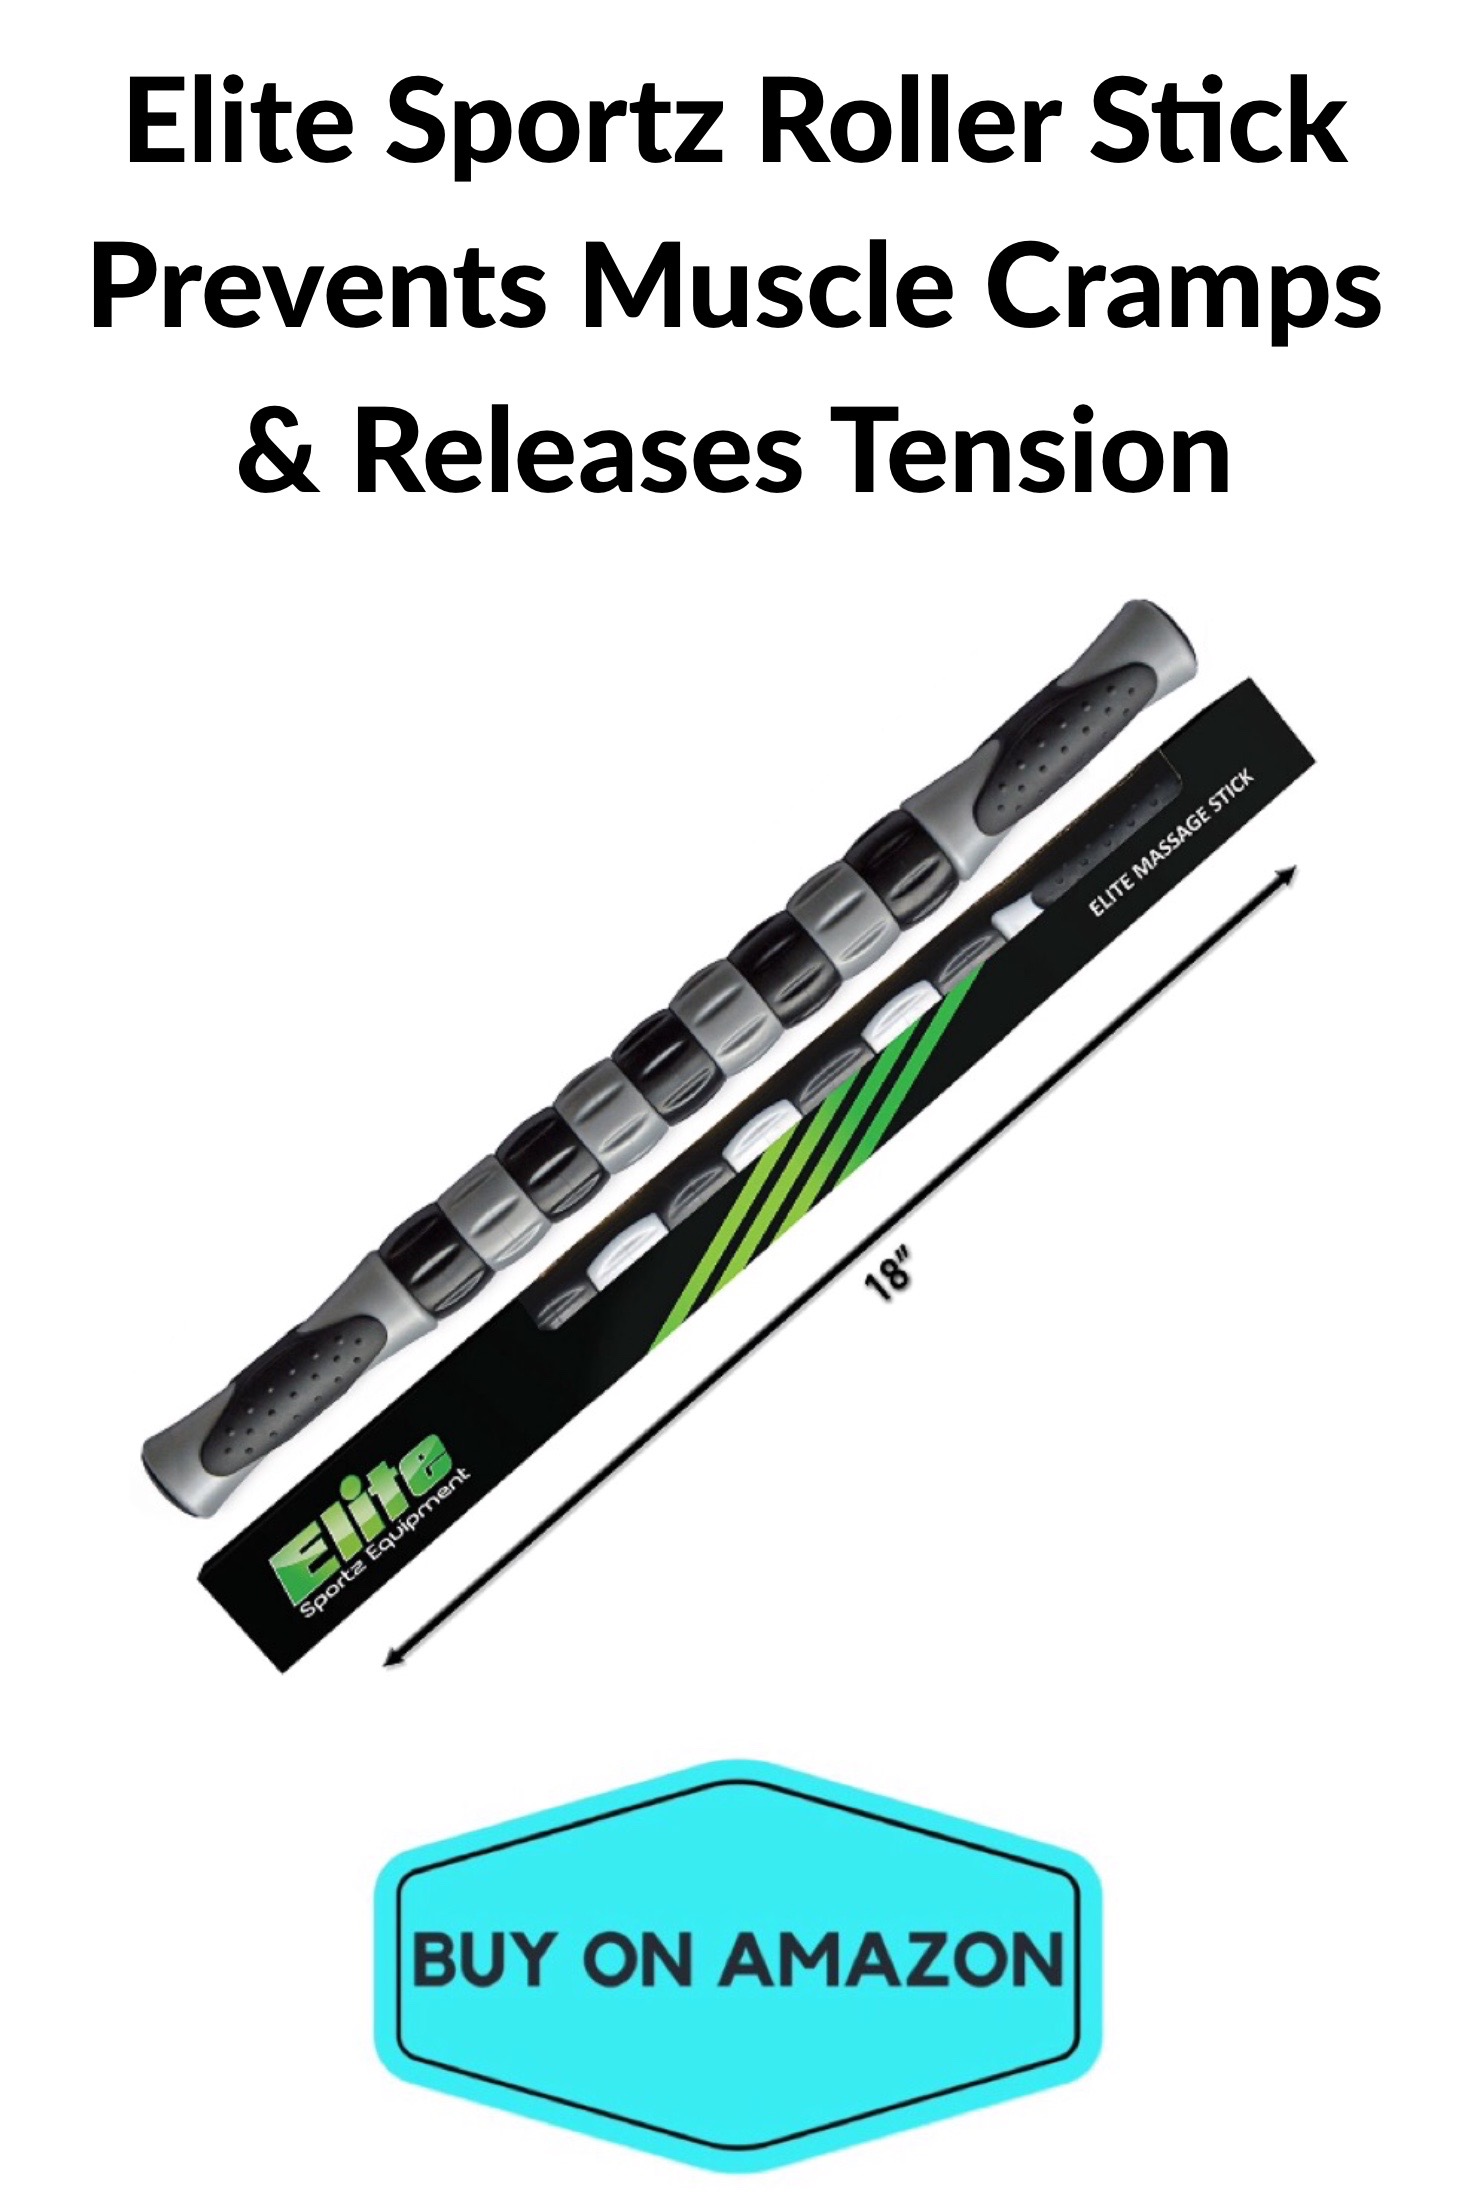 Elite Sportz Roller Stick For Muscle Cramps/Tension